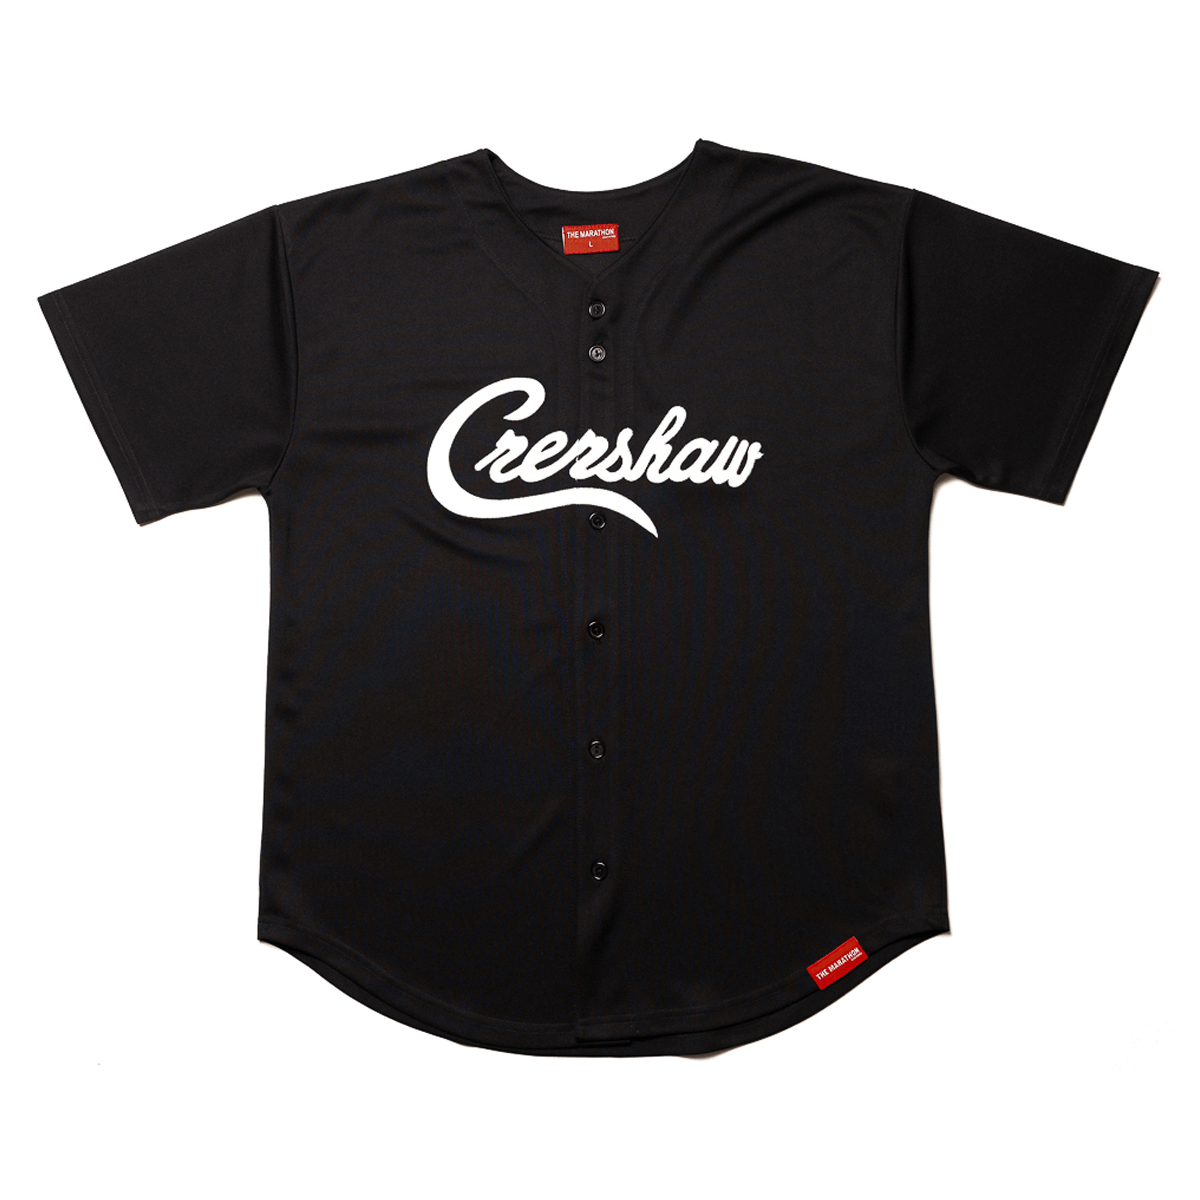 Crenshaw Baseball Jersey - Solid Black/White-The Marathon Clothing